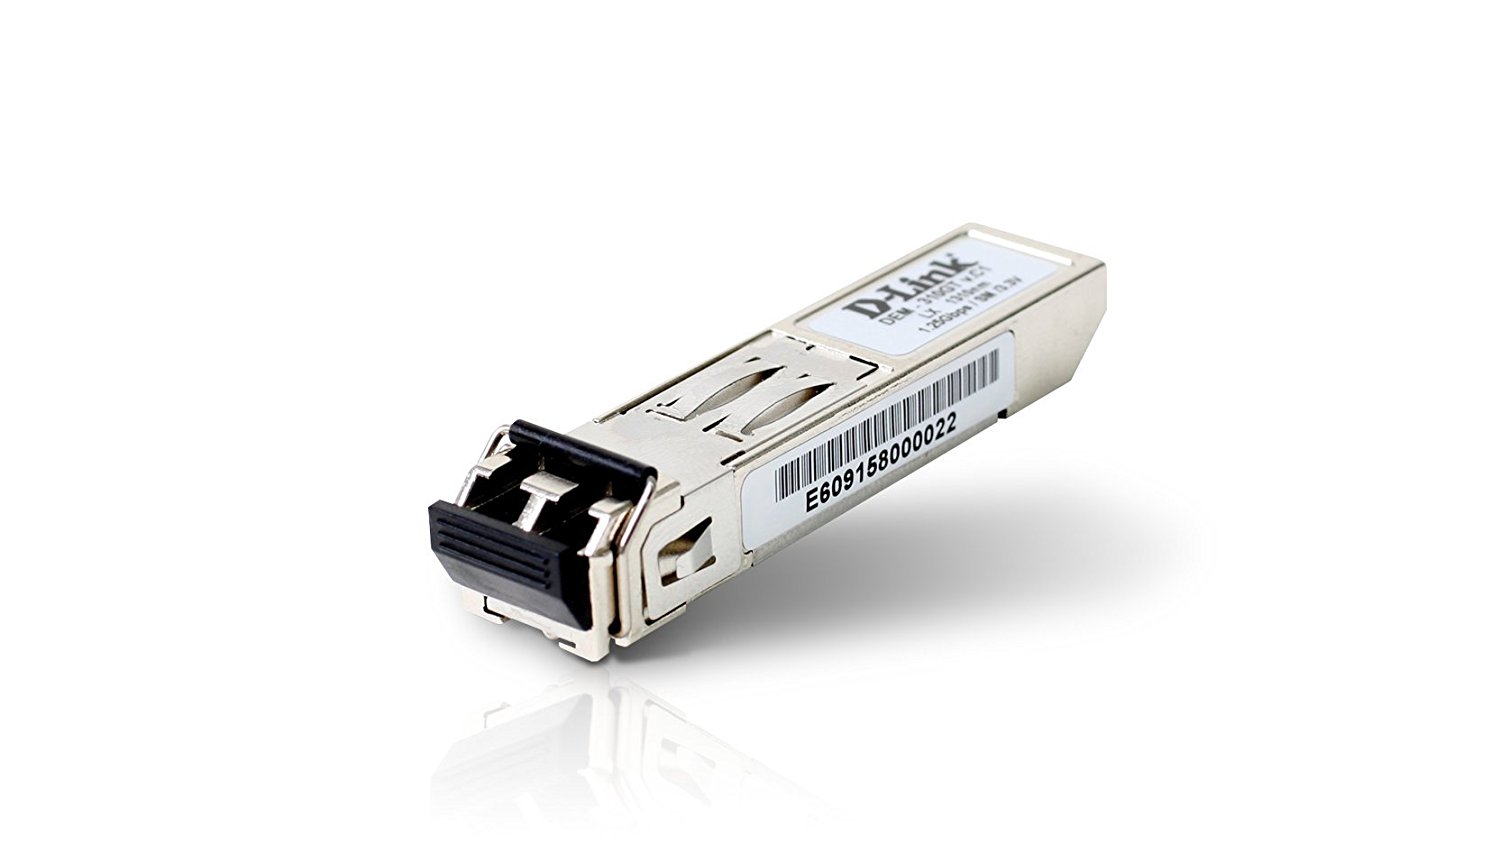 D-Link DEM-310GT 1000BASE-LX Mini-GBIC Gigabit Ethernet Module